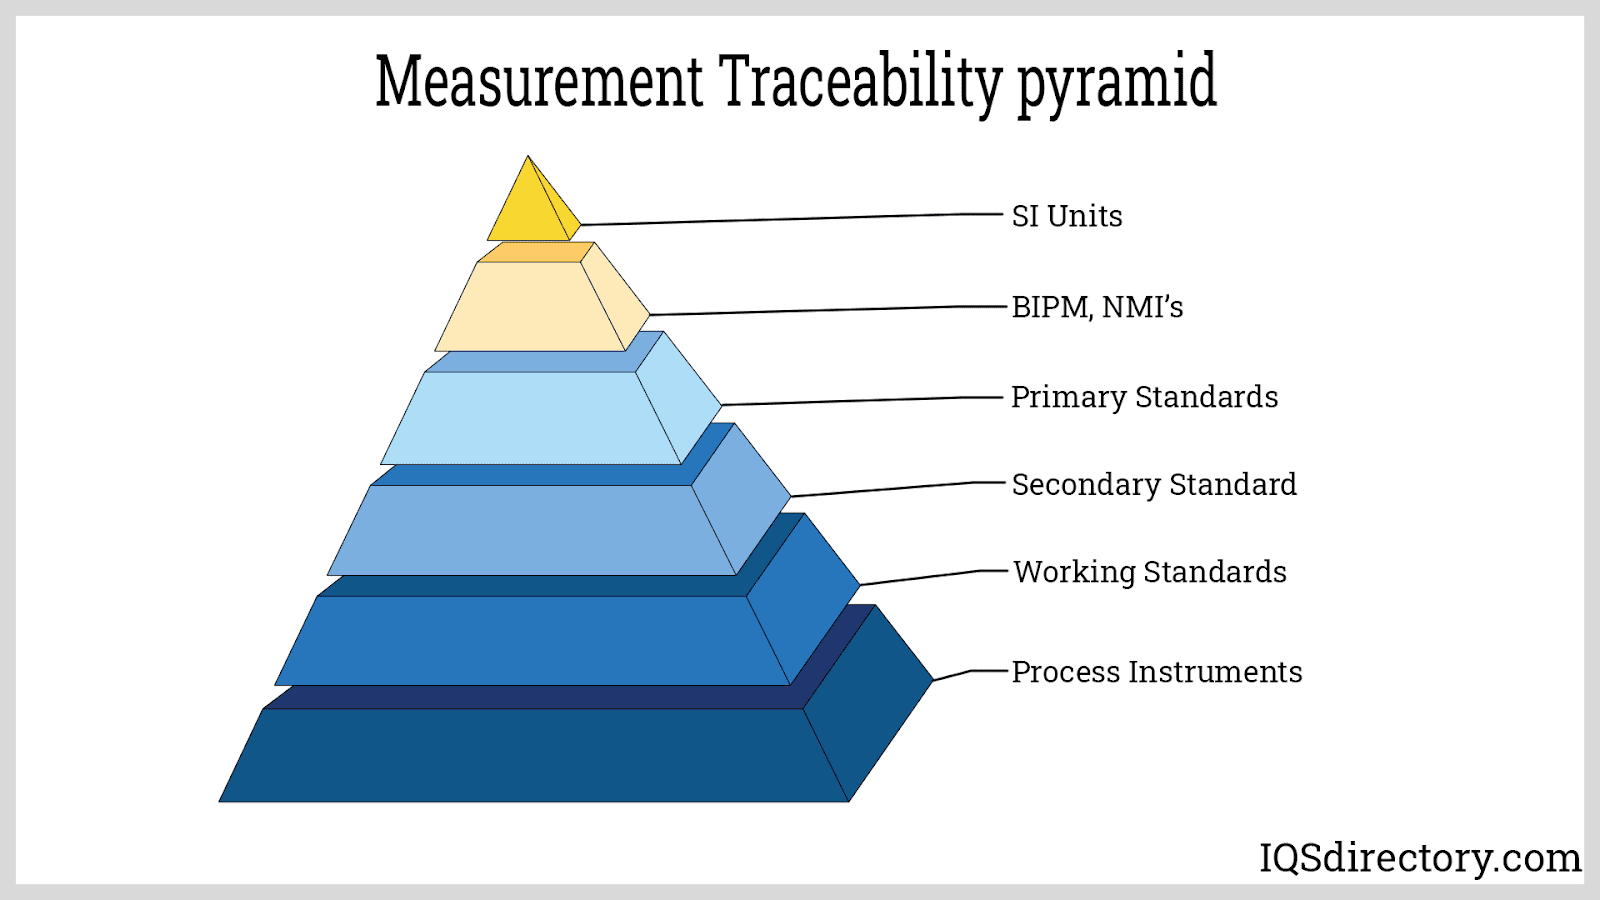 Measurement Traceability pyramid 